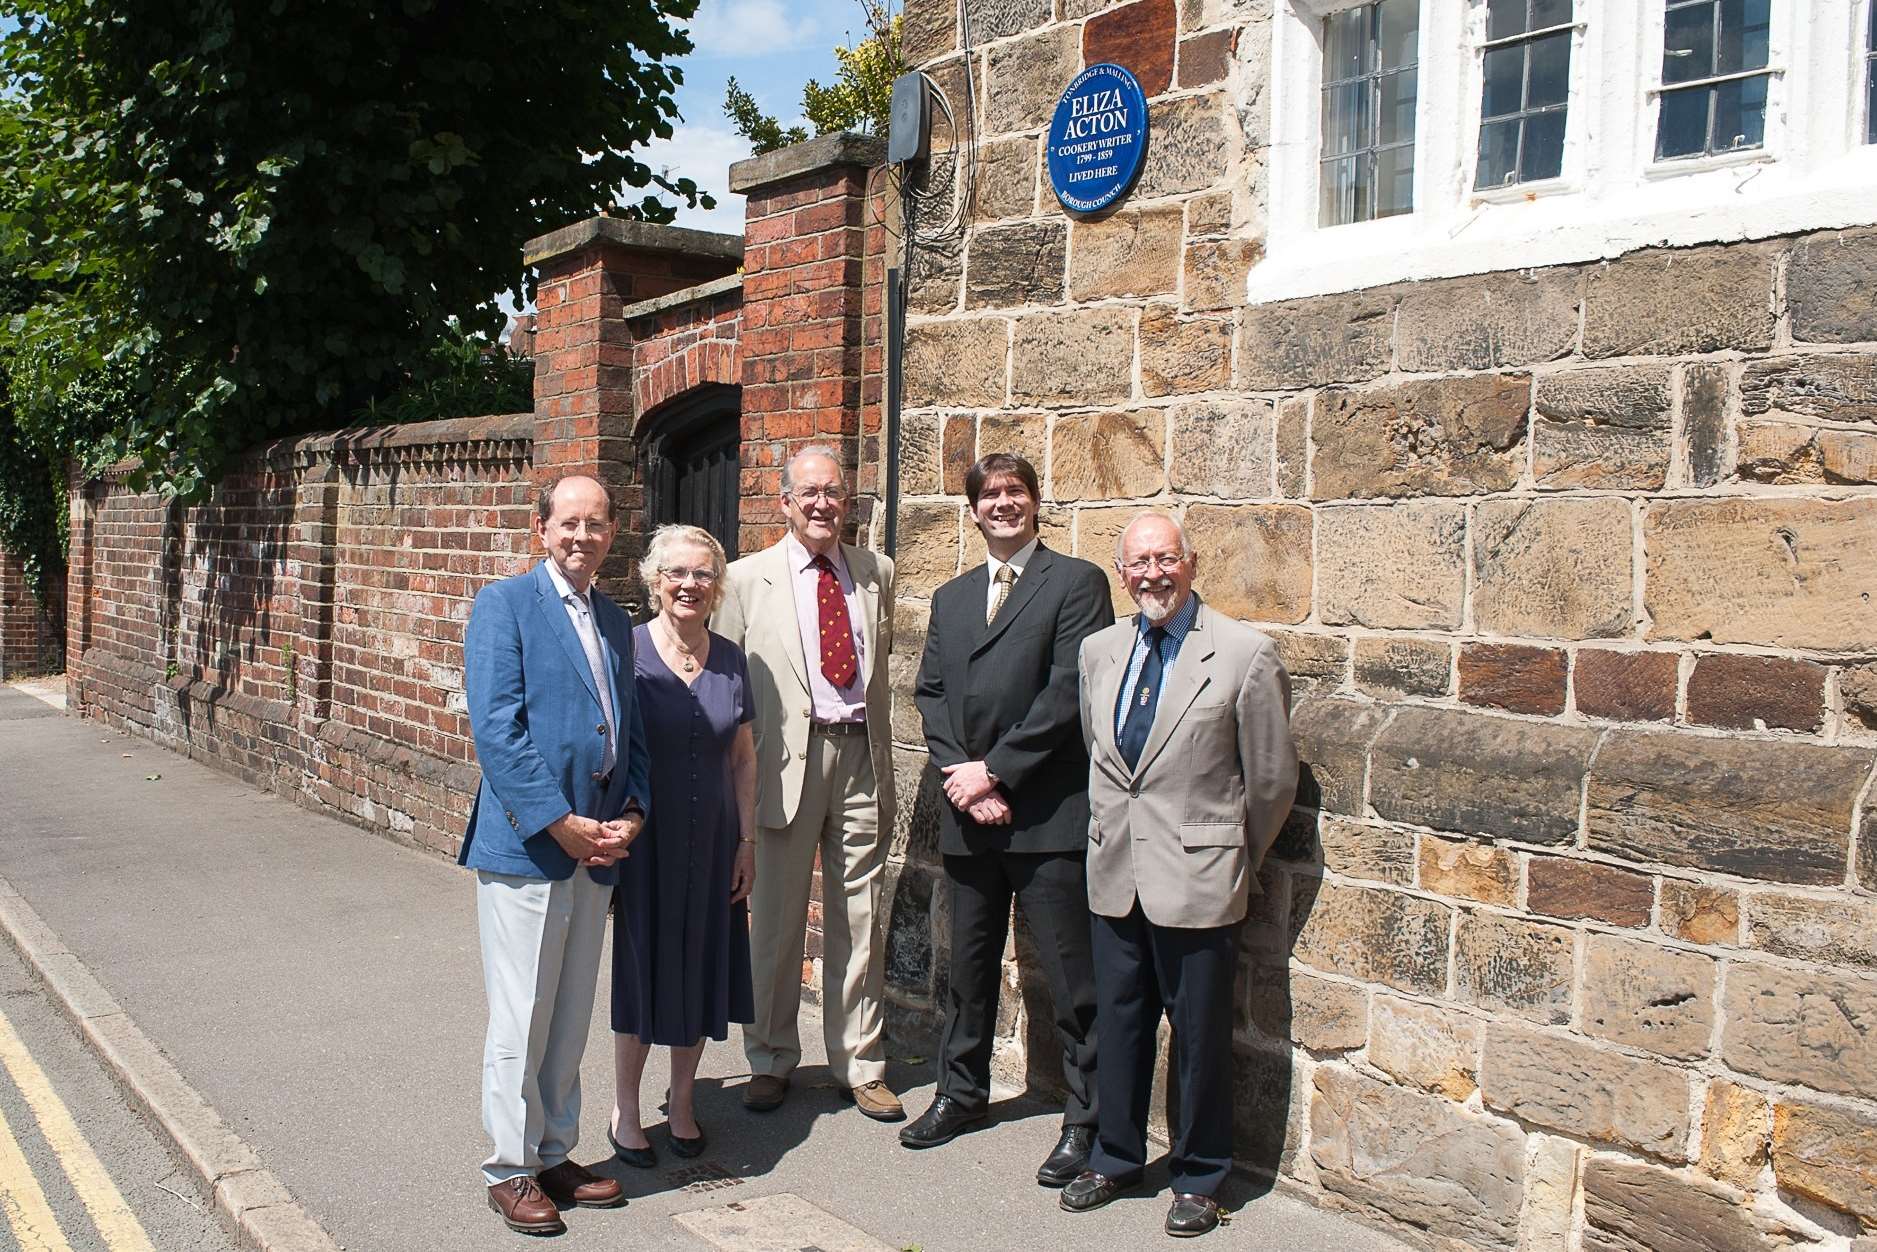 Paul Britton, Patricia Mortlock, John Smalman-Smith, Stephen Gregg and David Davis celebrate the unveiling of the blue plaque to commemorate Eliza Acton at The Priory, Bordyke, Tonbridge.